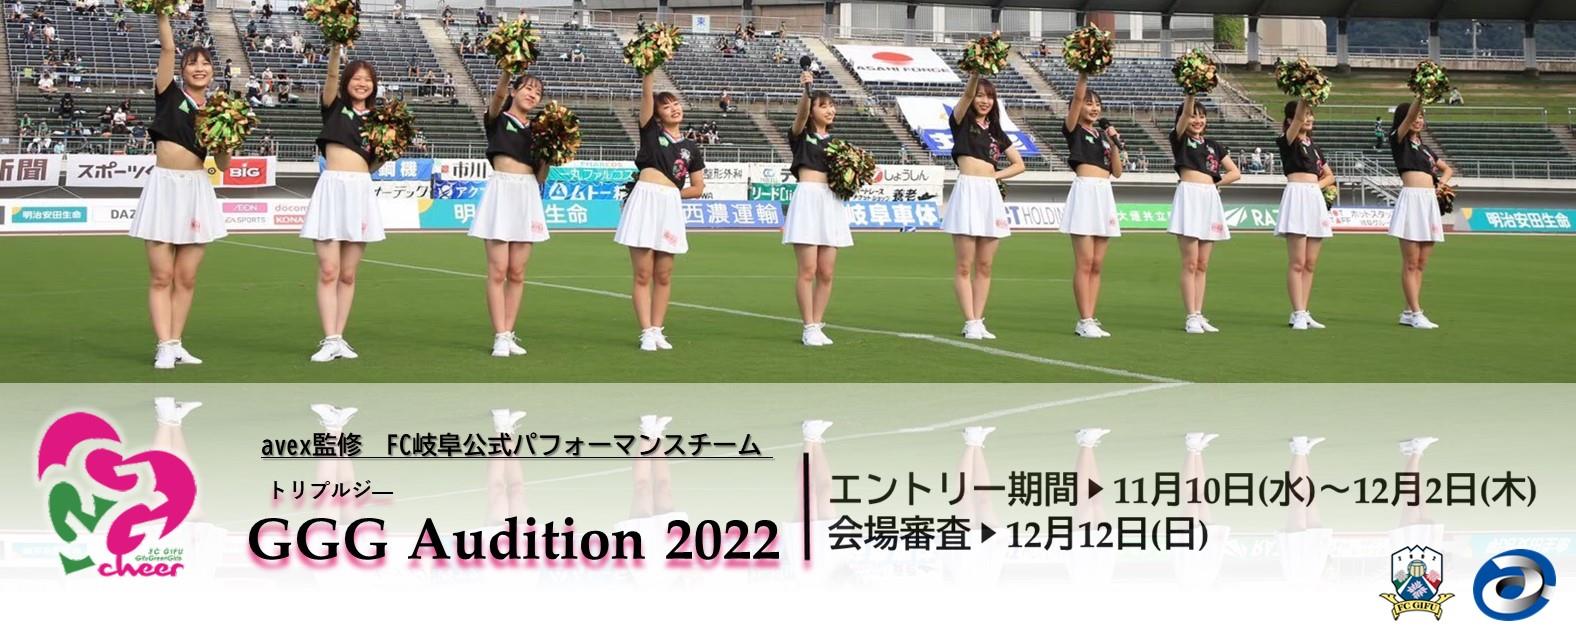 FC岐阜×avex GGG AUDITION 2022